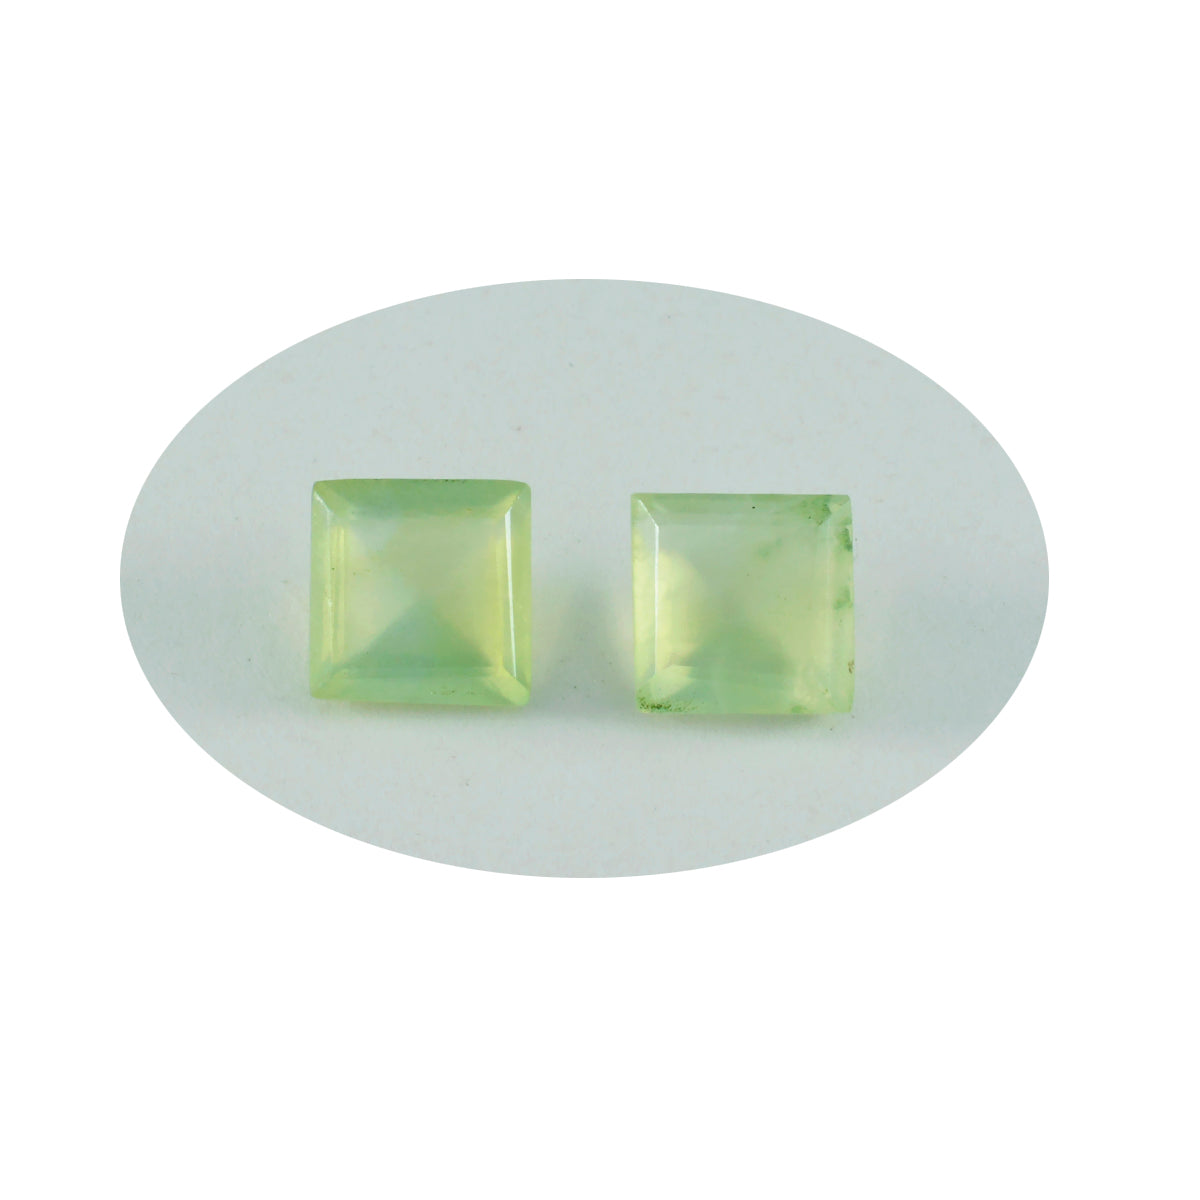 riyogems 1pc グリーン プレナイト ファセット 8x8 mm 正方形の形の見栄えの良い品質のルース宝石